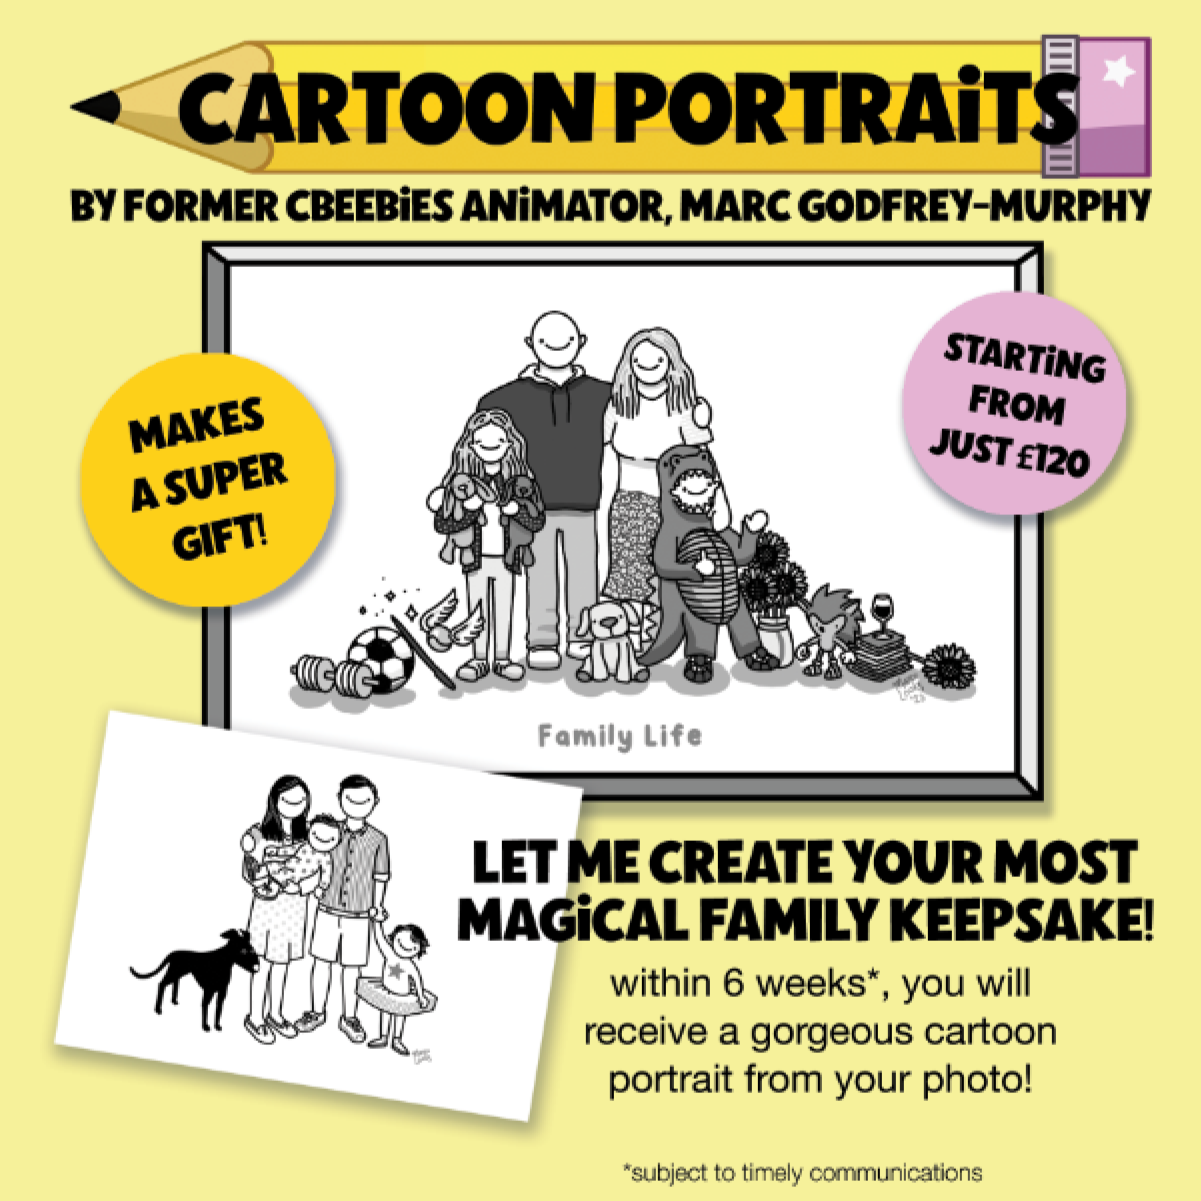 Cartoon portrait of your family by cbeebies animator marc godfrey murphy